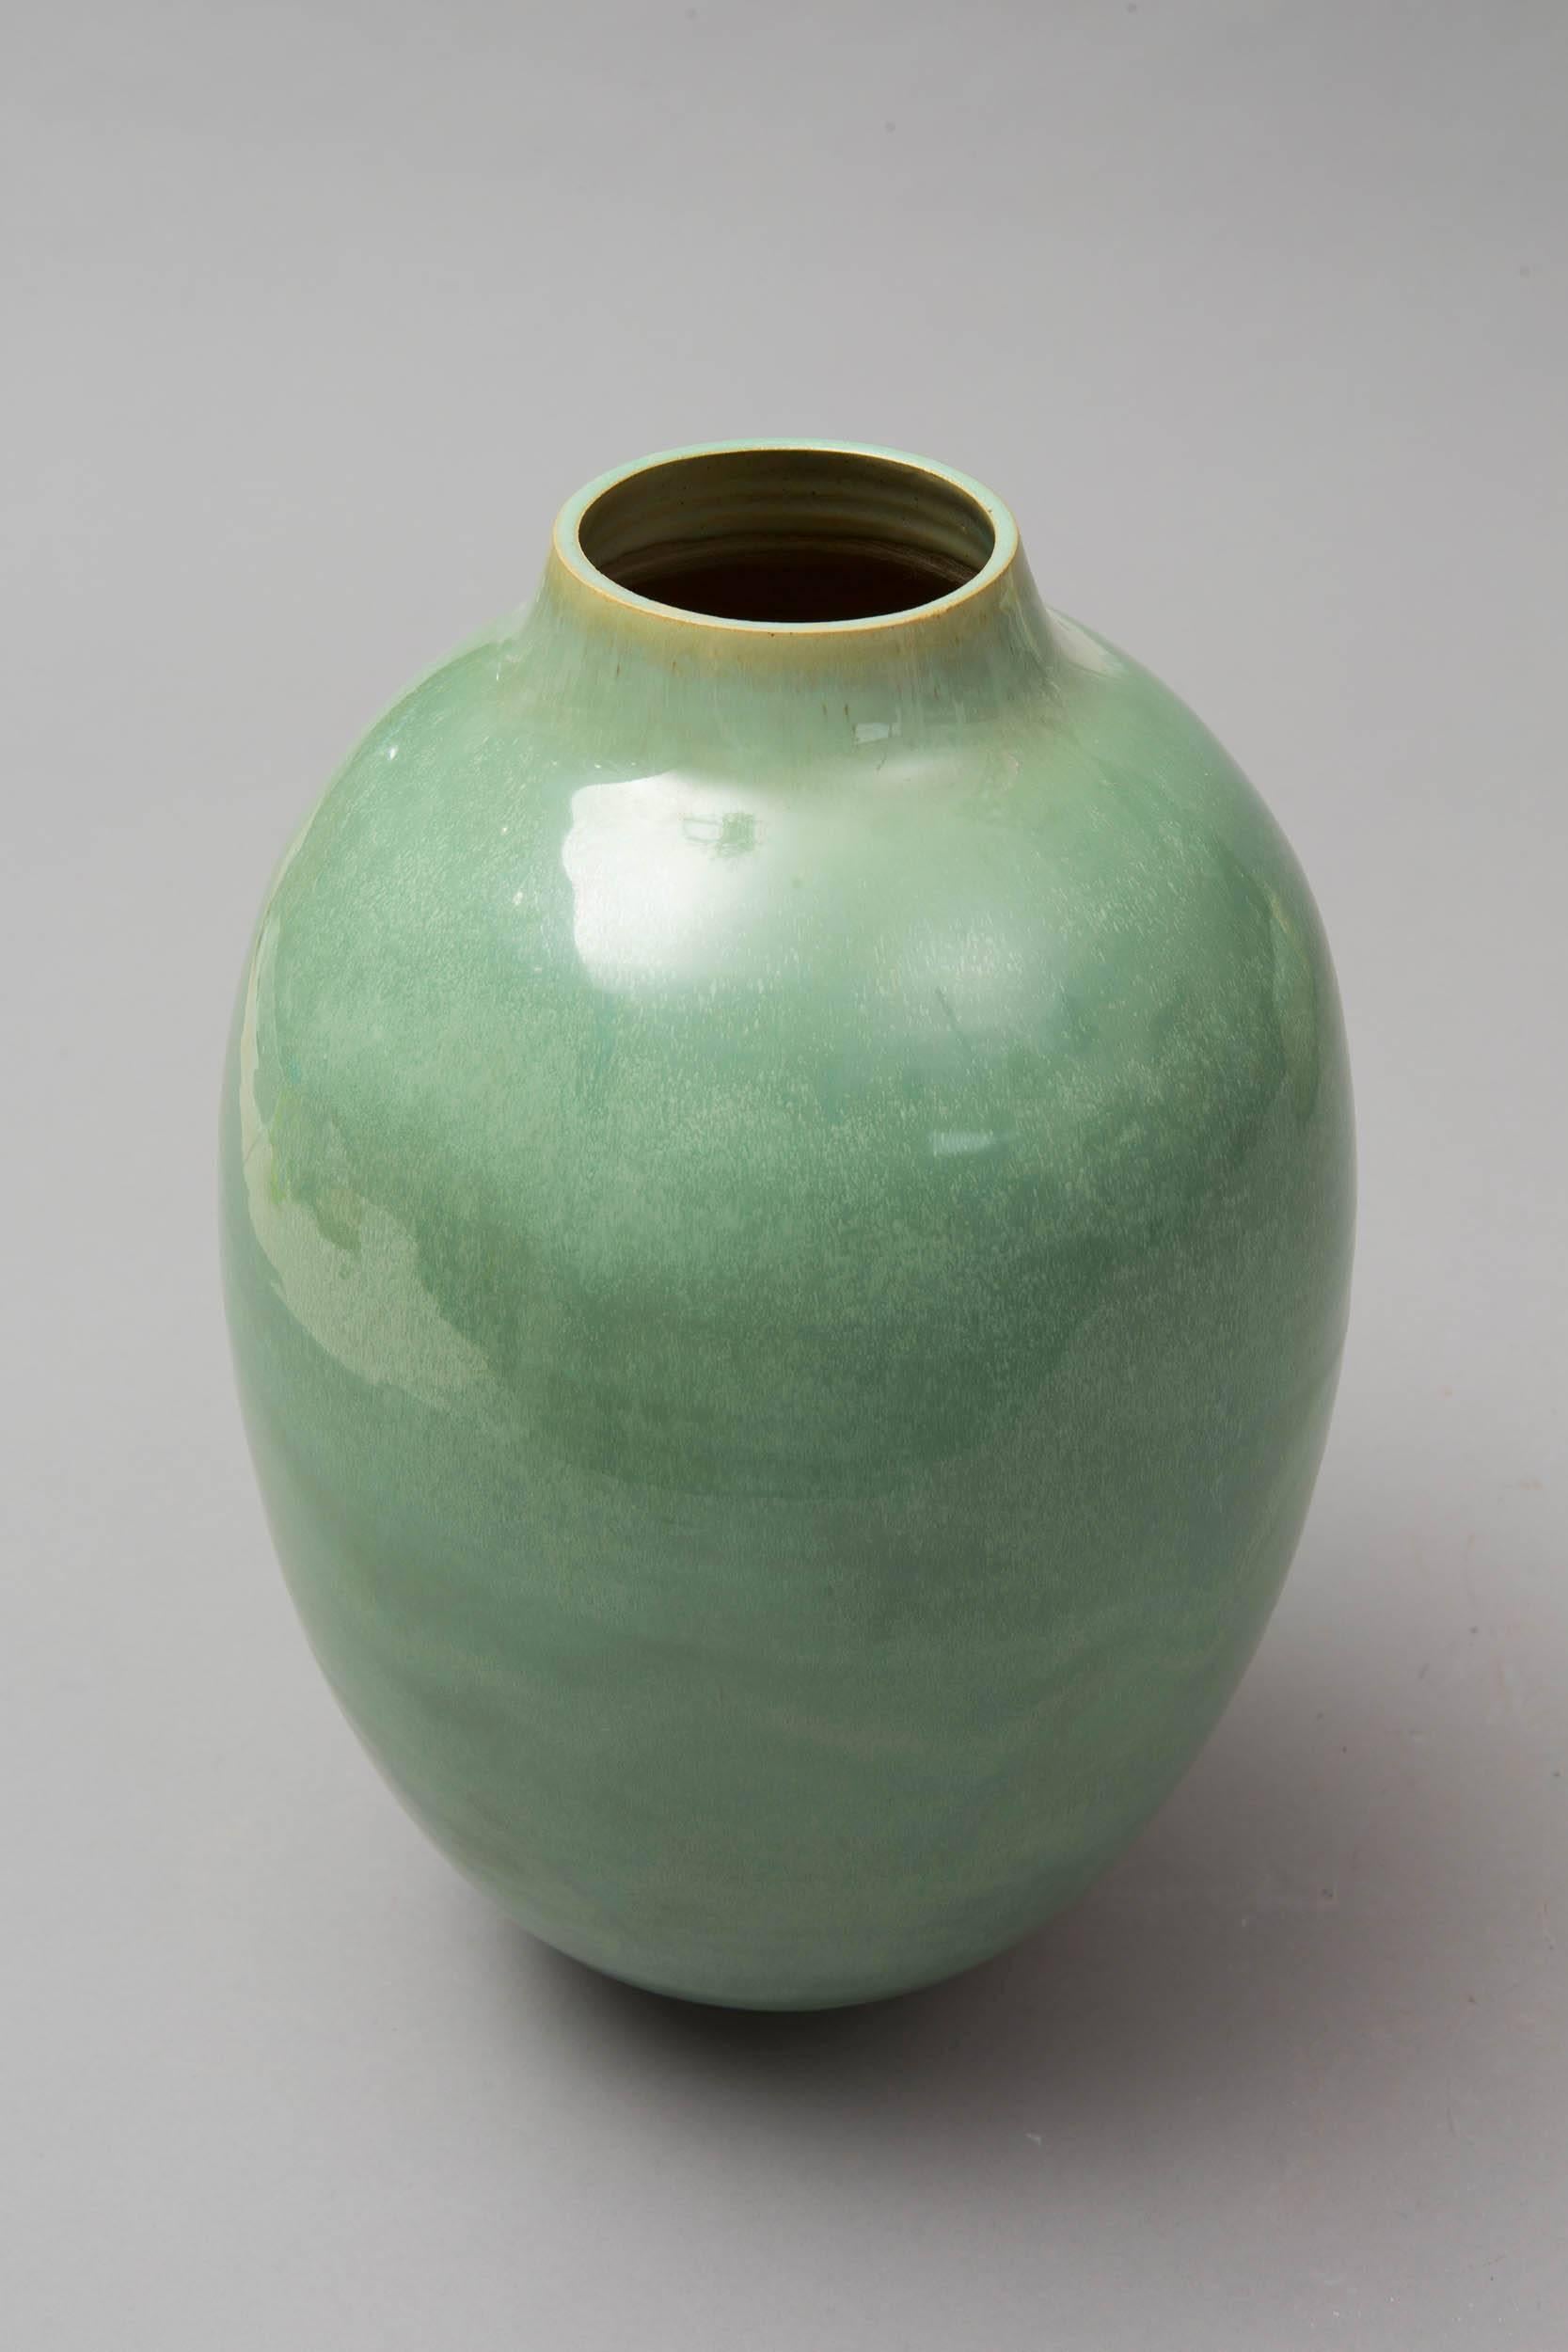 Wheel thrown ceramic green celadon vase.
White stoneware glazed. 
One of a kind.
Signed on the bottom. 